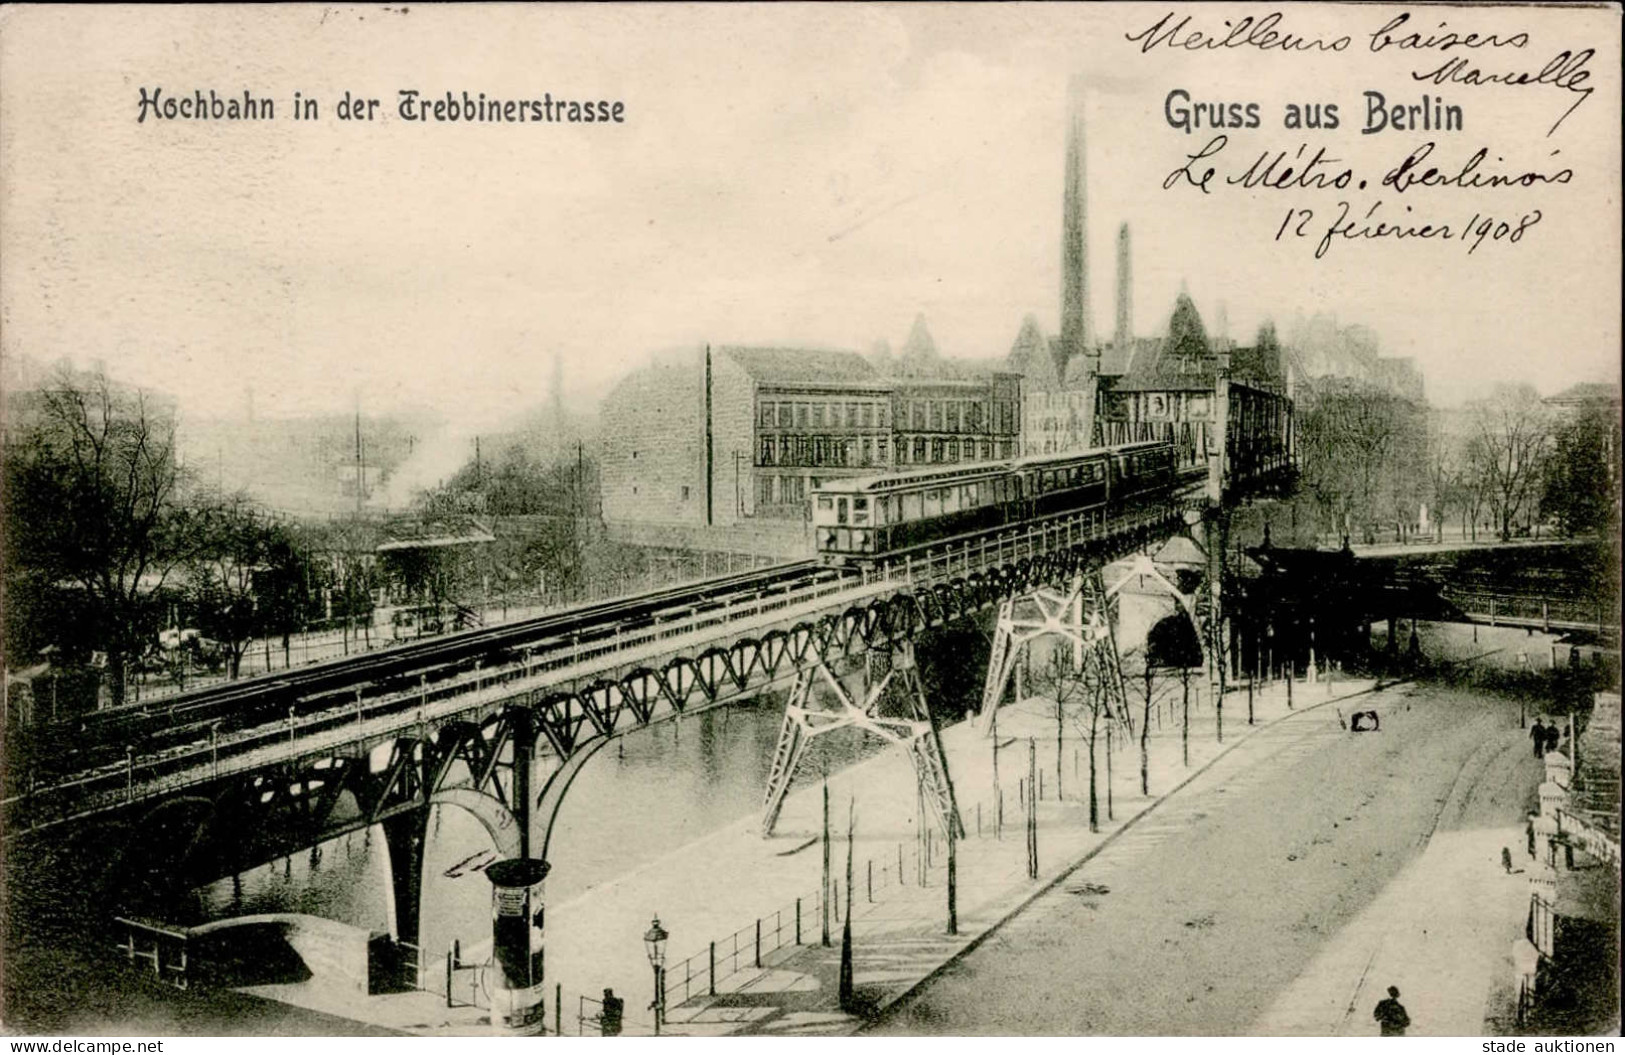 Berlin (1000) Hochbahn Trebbinerstrasse 1908 I-II - Ploetzensee